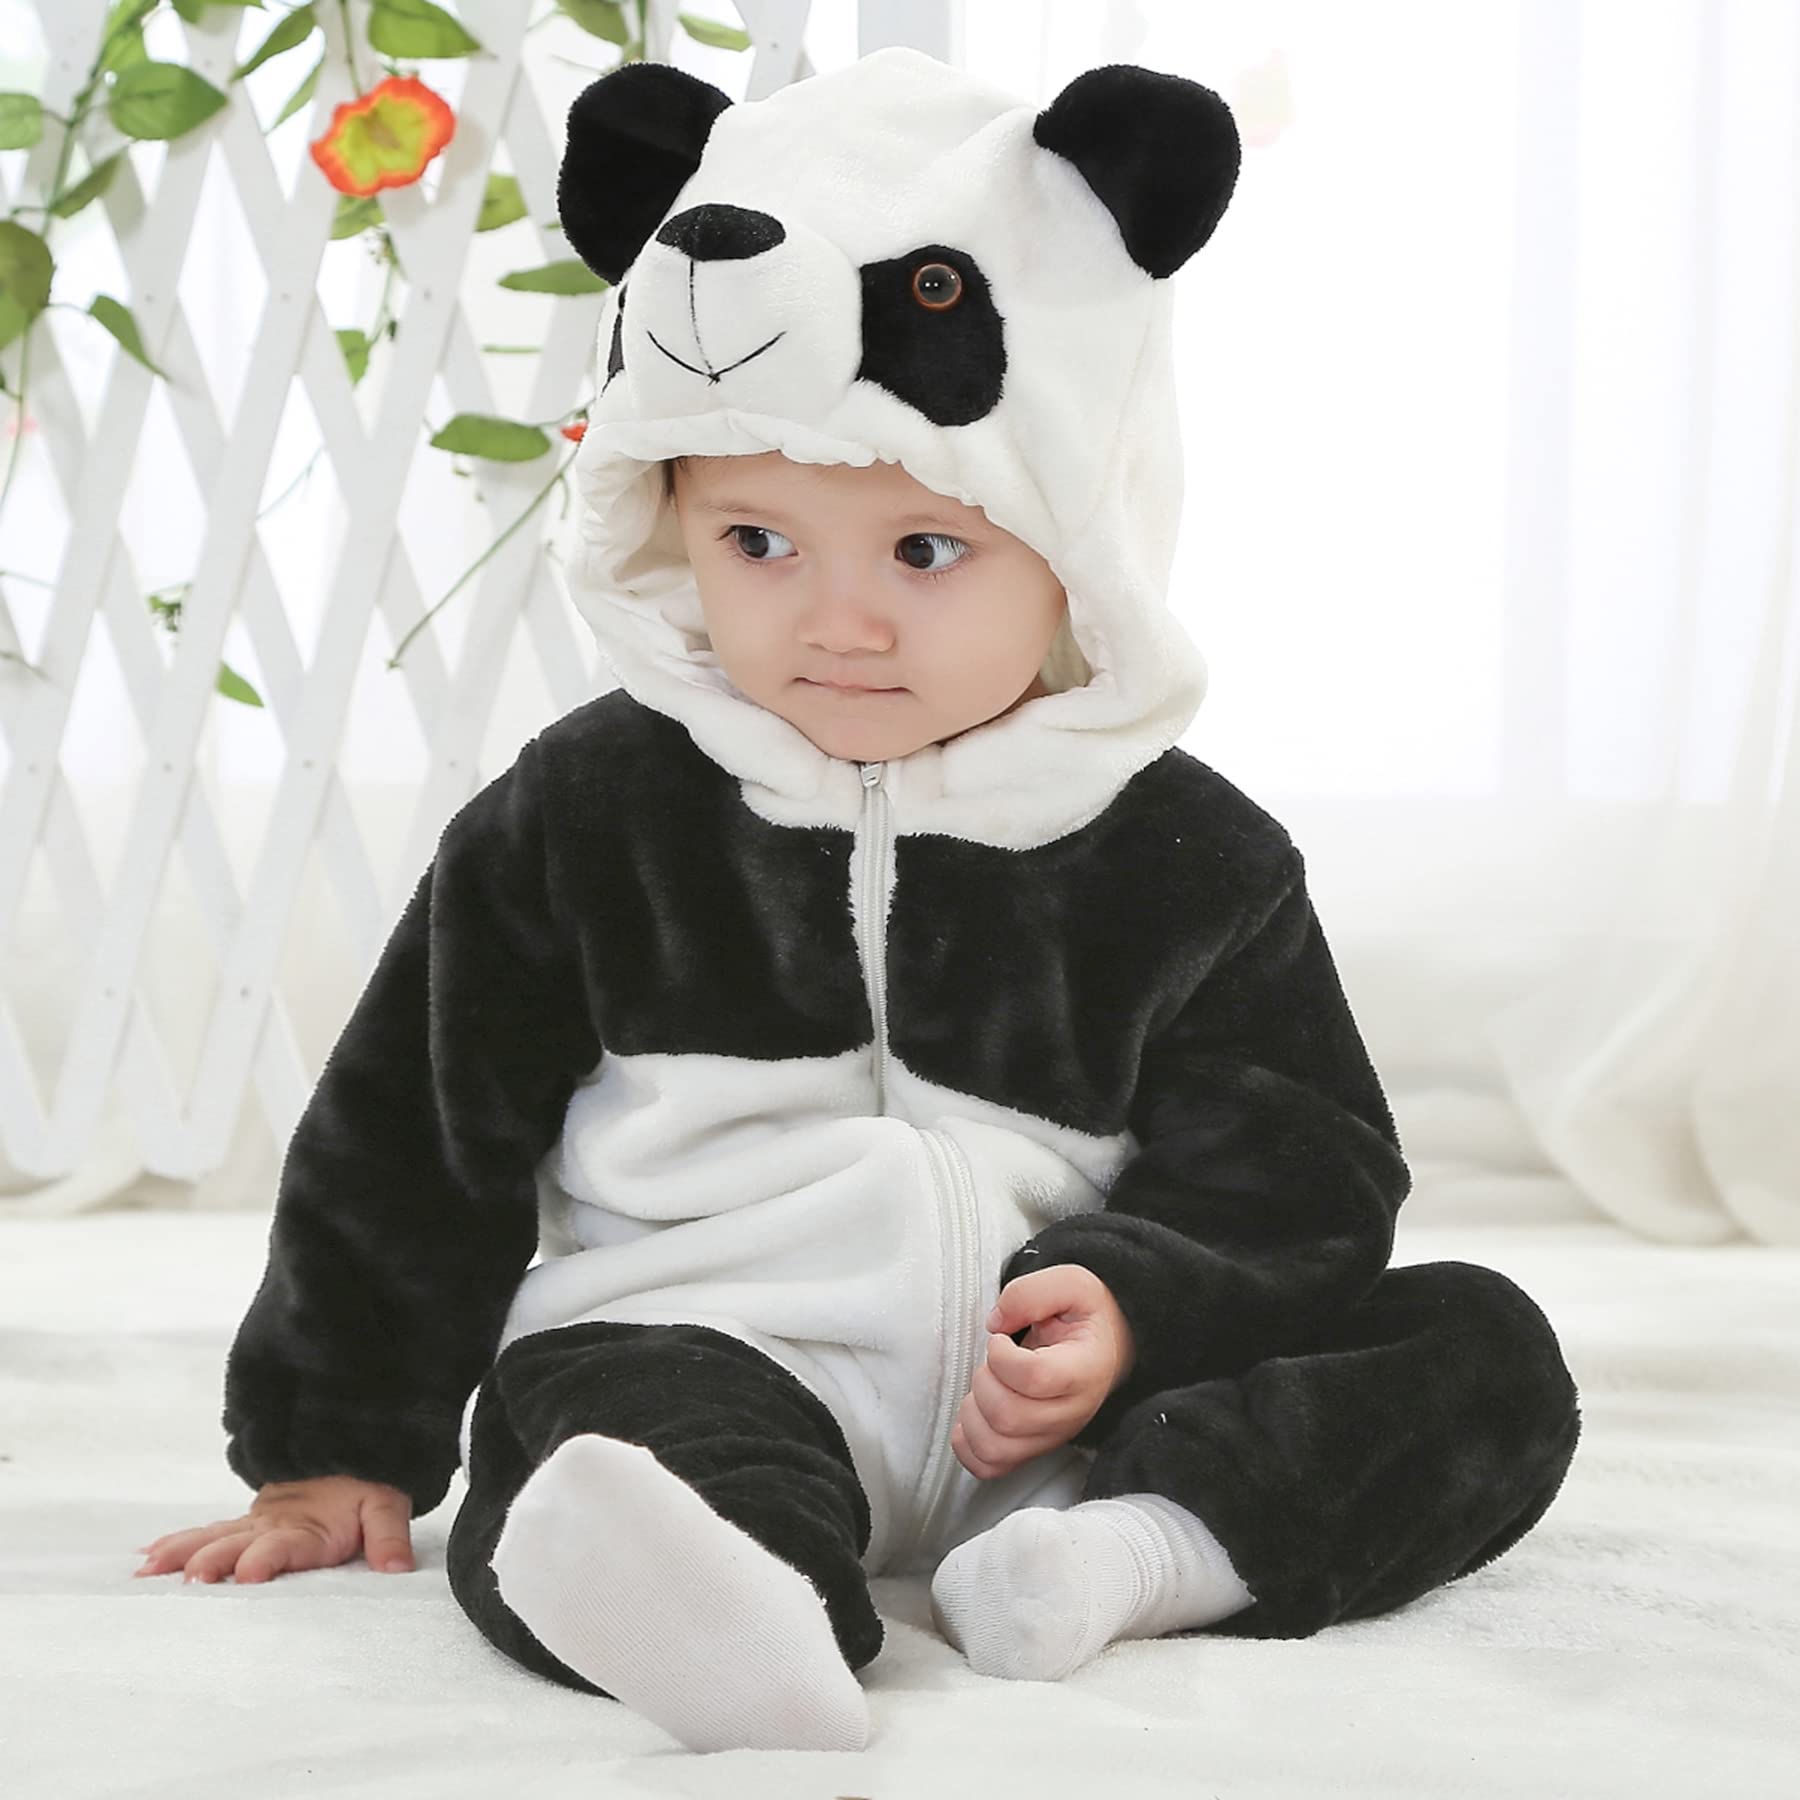 TONWHAR Unisex-Baby Animal Onesie Costume Cartoon Animal Outfit Homewear Kids' One-Piece Rompers